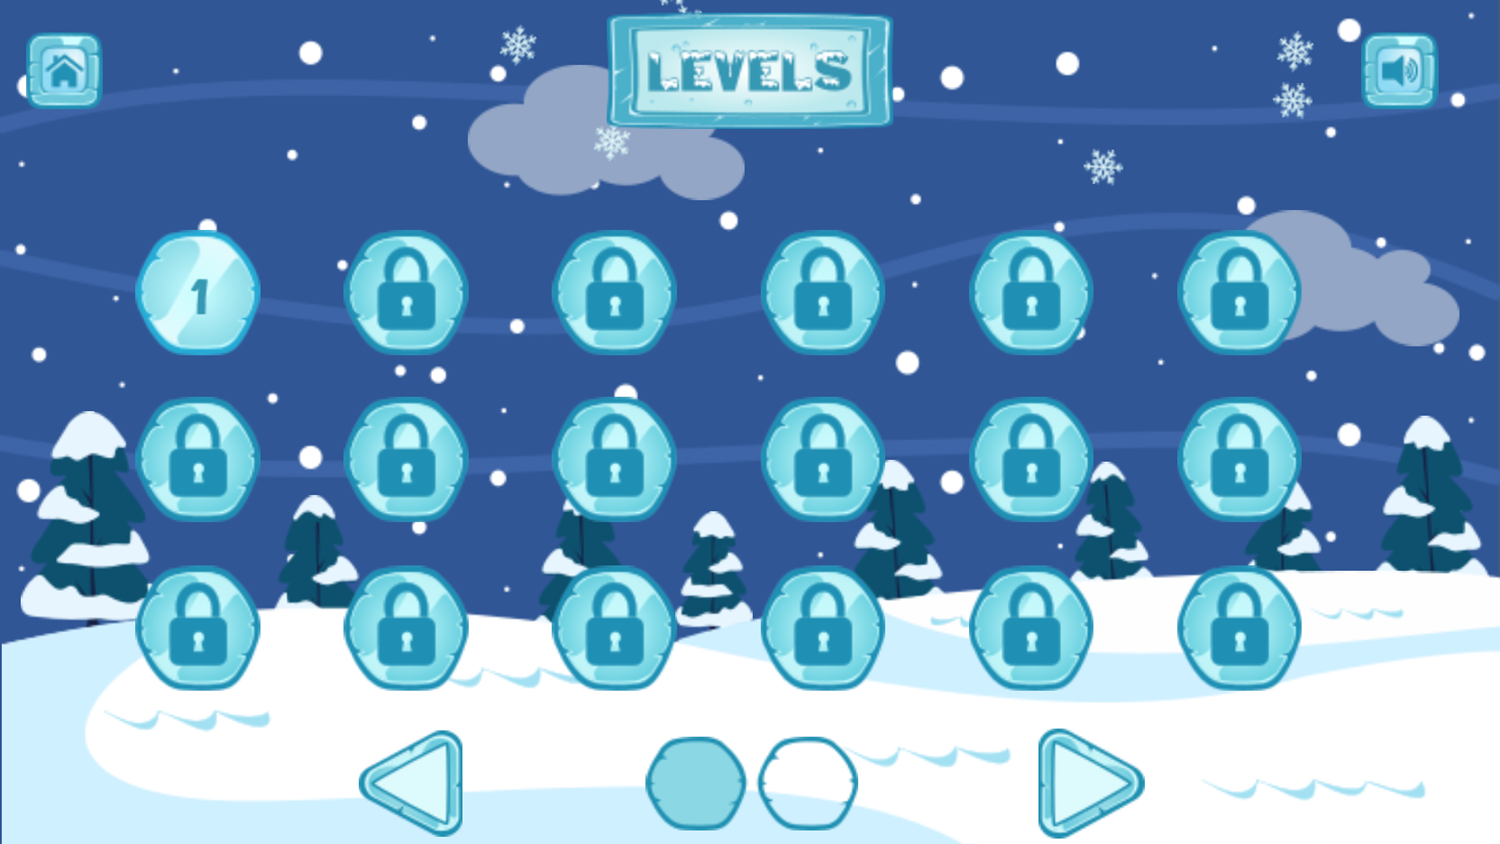 Geometry Penguin Game Level Select Screenshot.